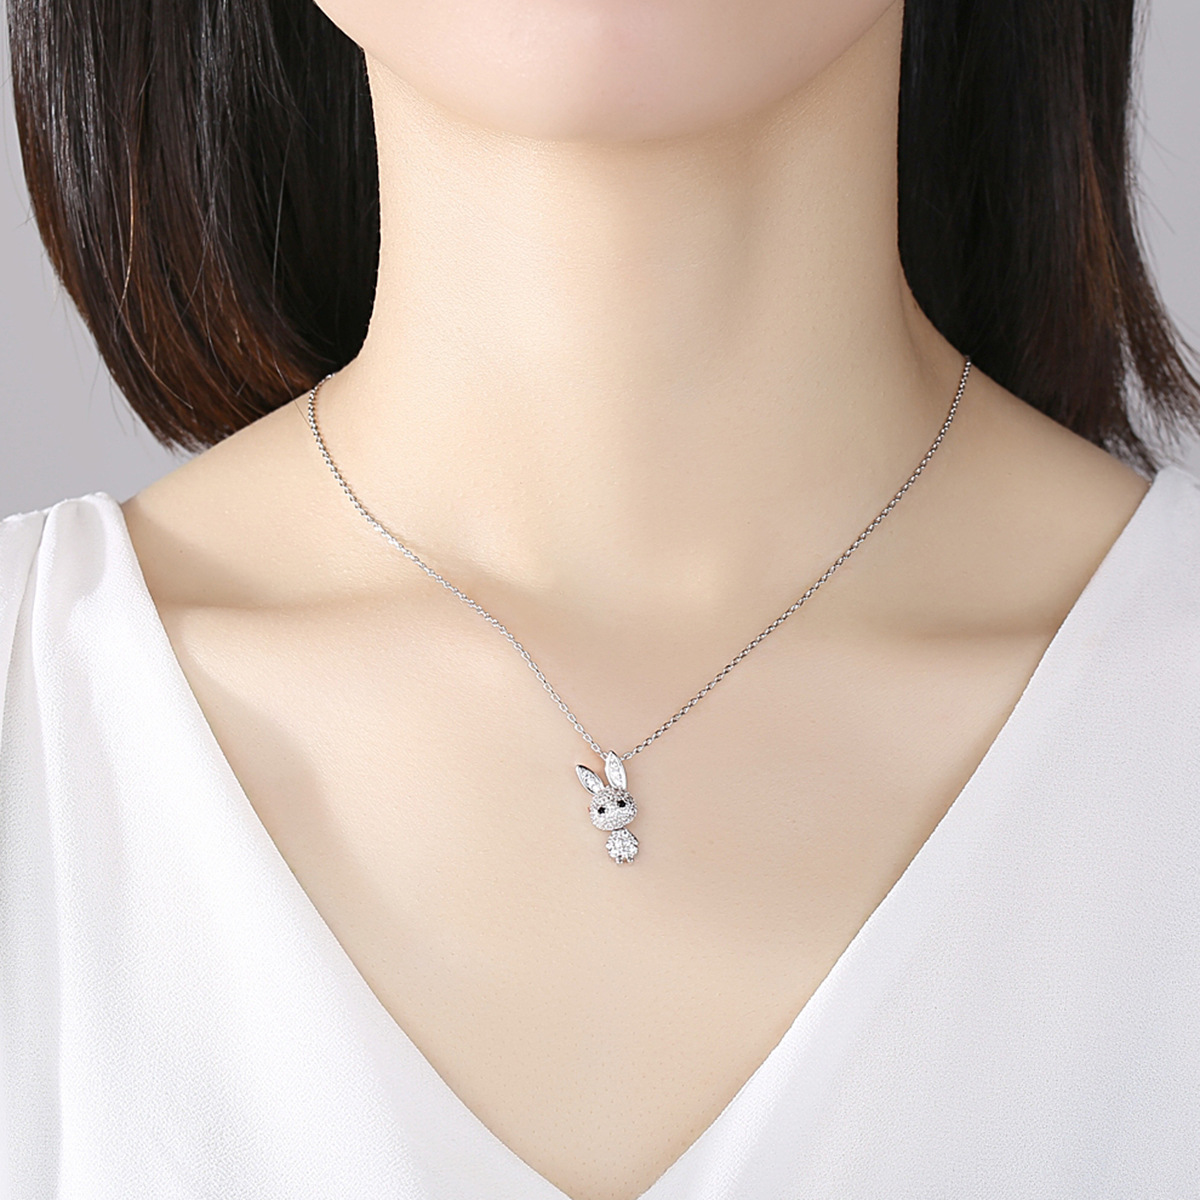 Rabbit pendant chain accessories Korean style short clavicle